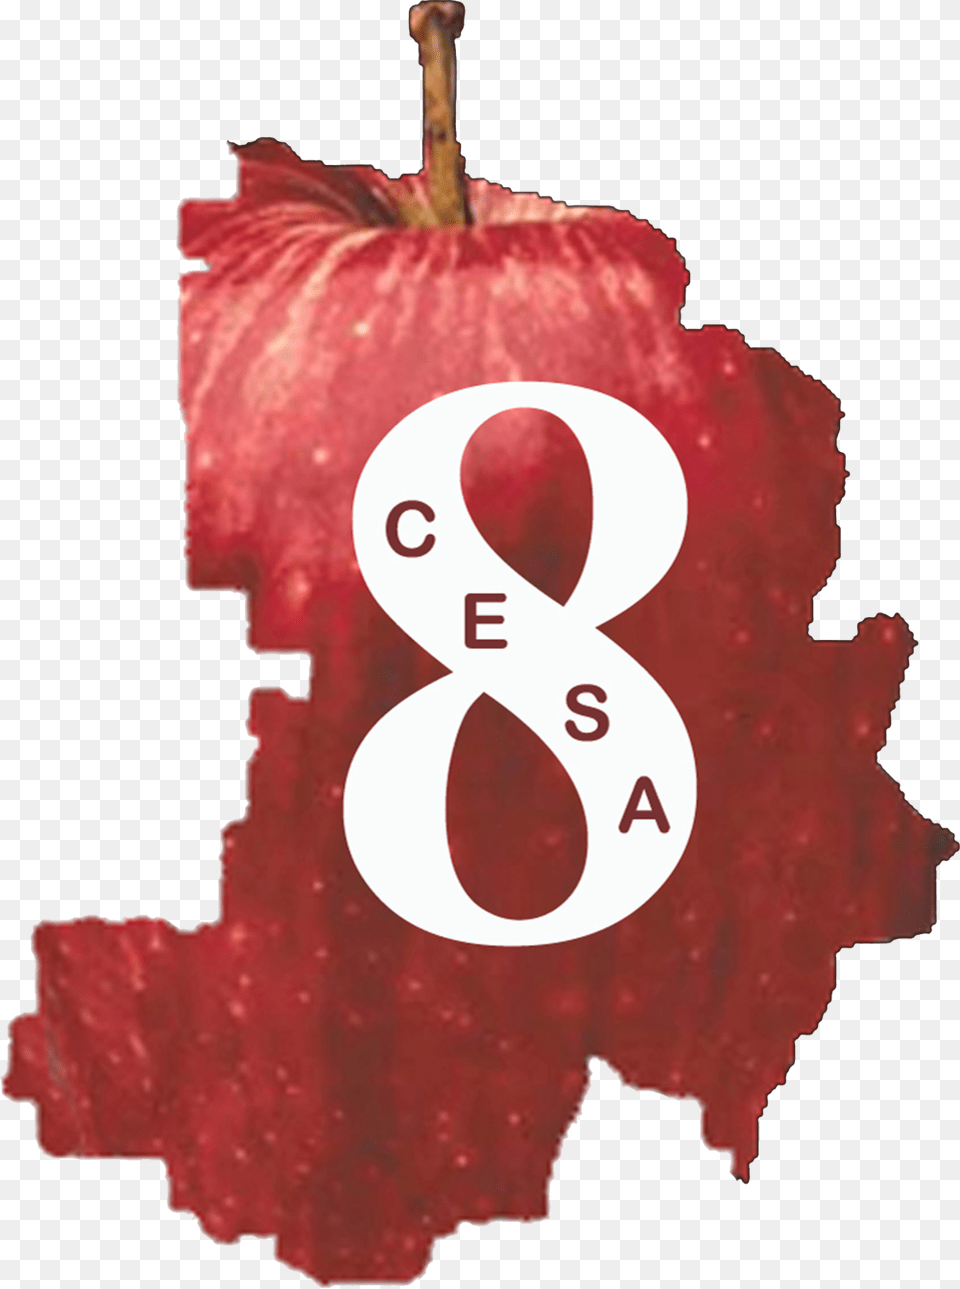 Cesa 8 New Logo Cesa, Apple, Food, Fruit, Plant Png Image